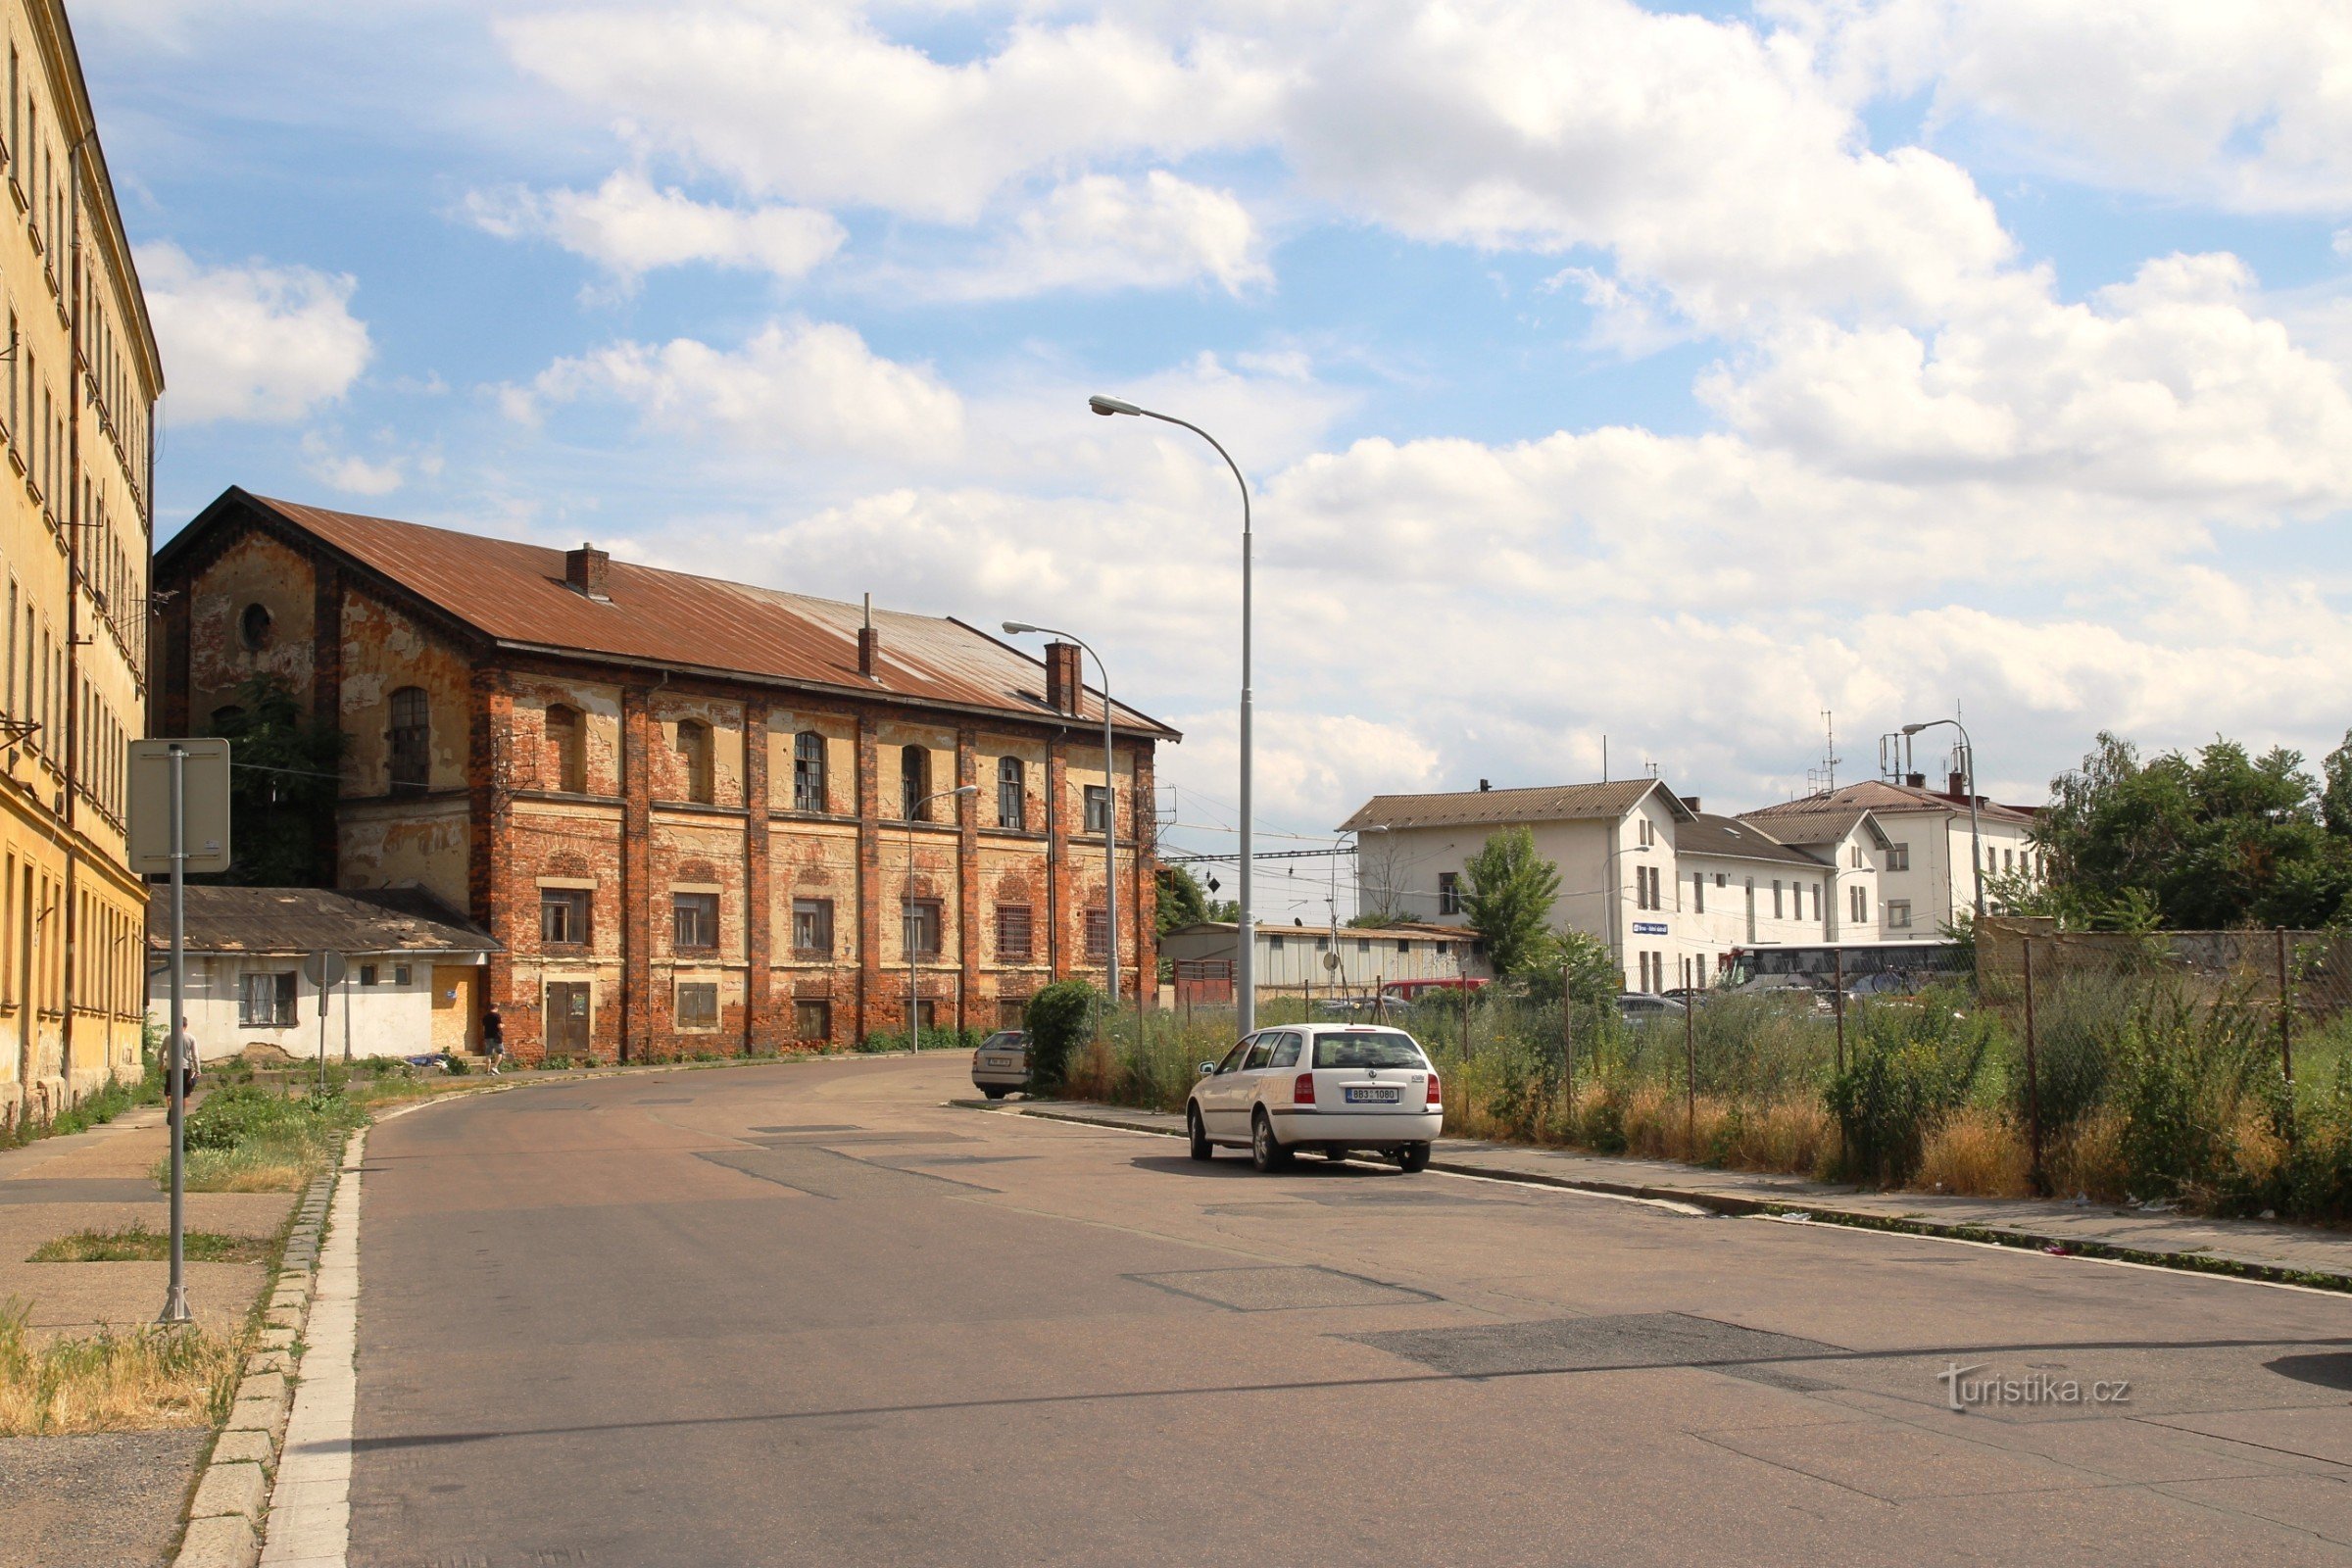 Access to the station via Rosická street